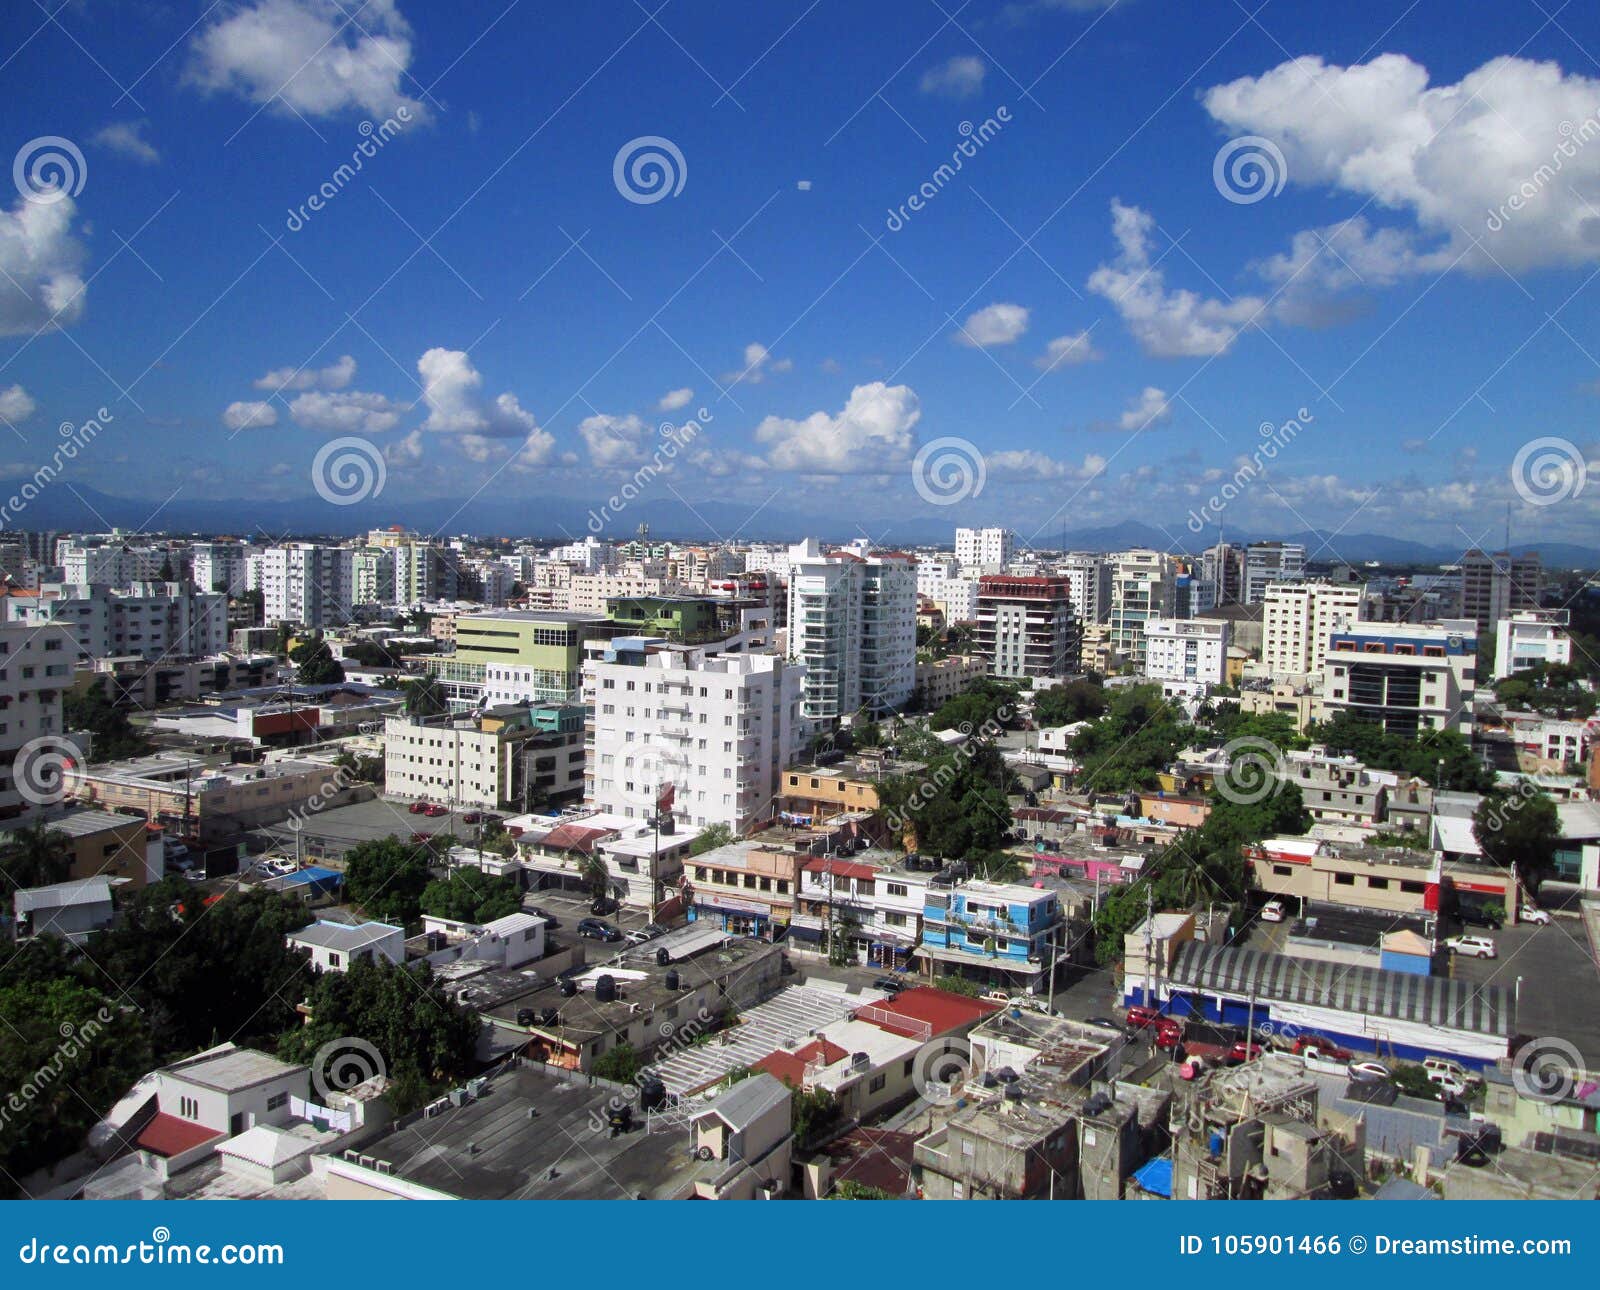 aerial view of the city of santo domingo, dominican republic